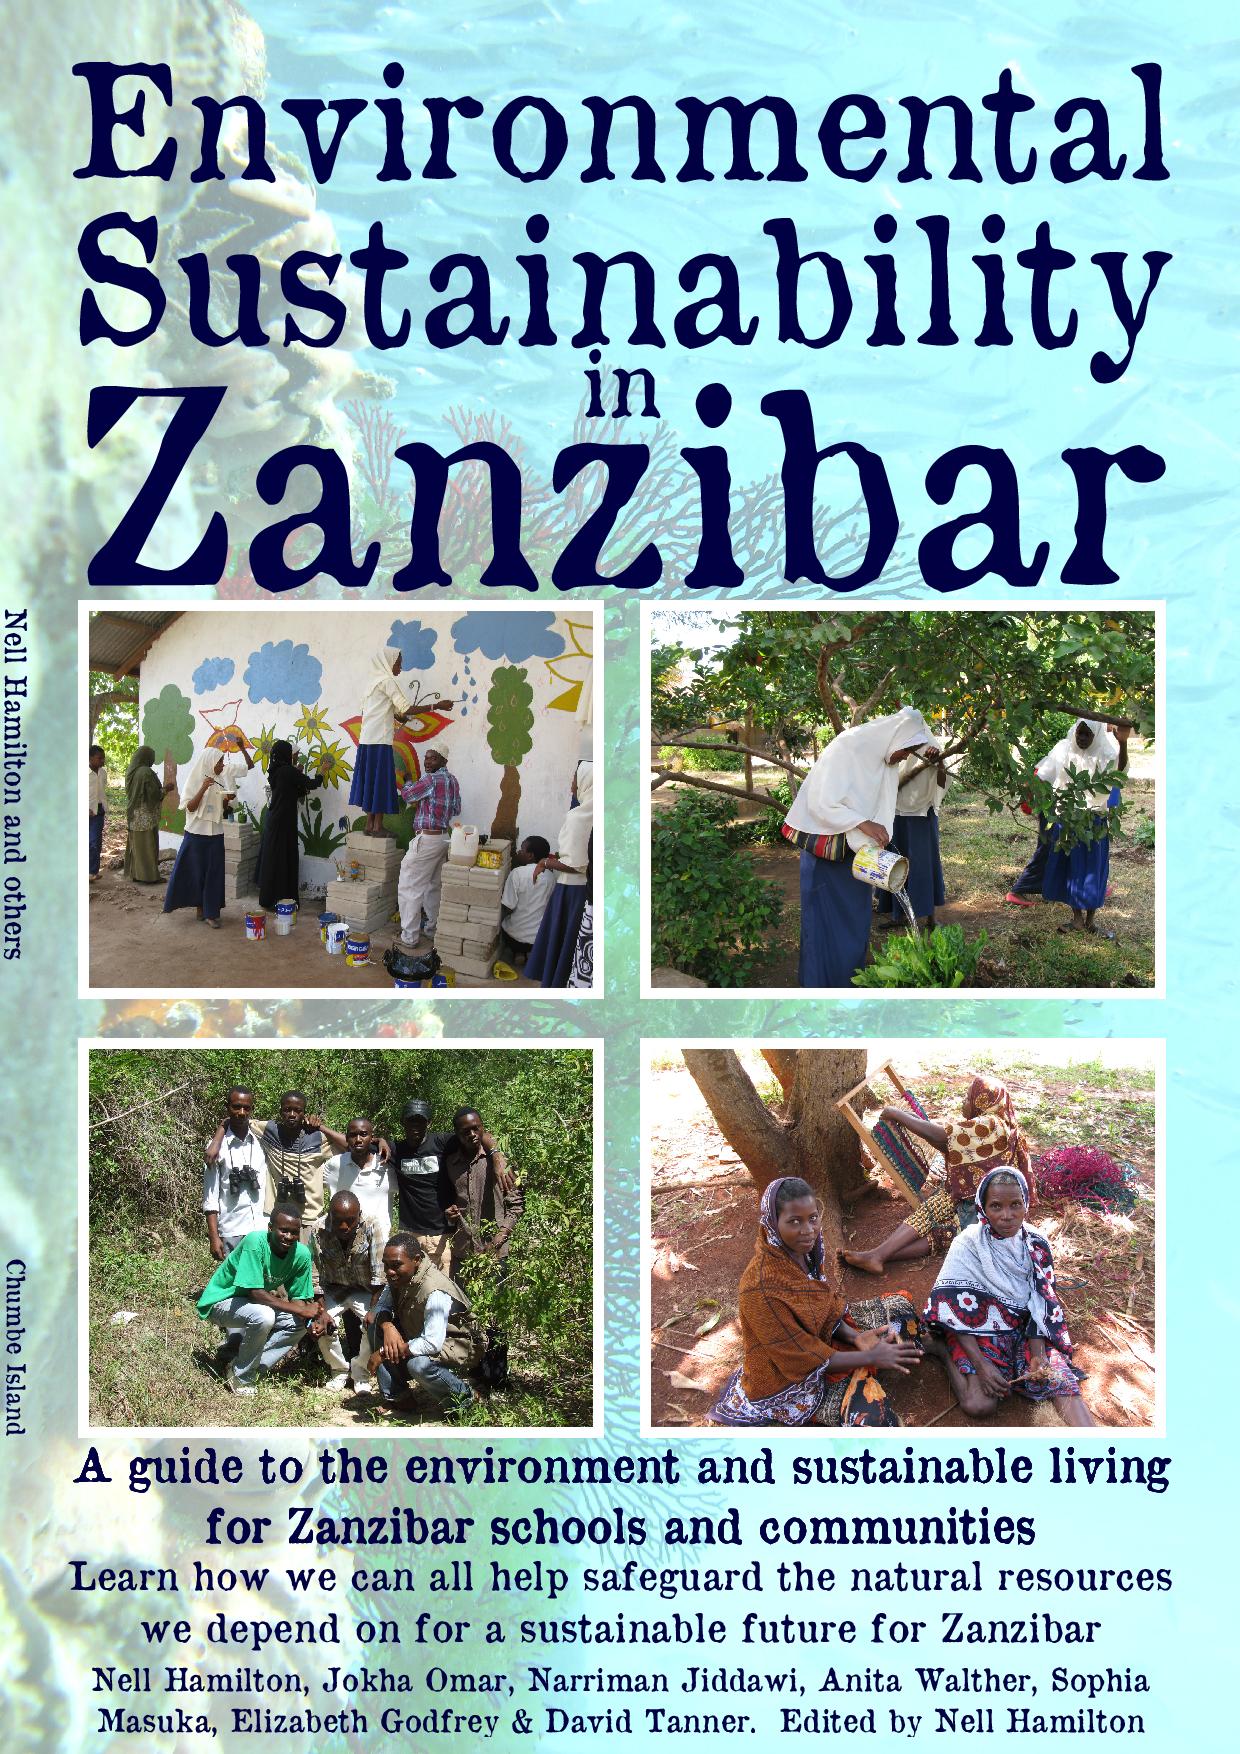 Environmental Sustainability in Zanzibar - download free from http://nellhamilton.com